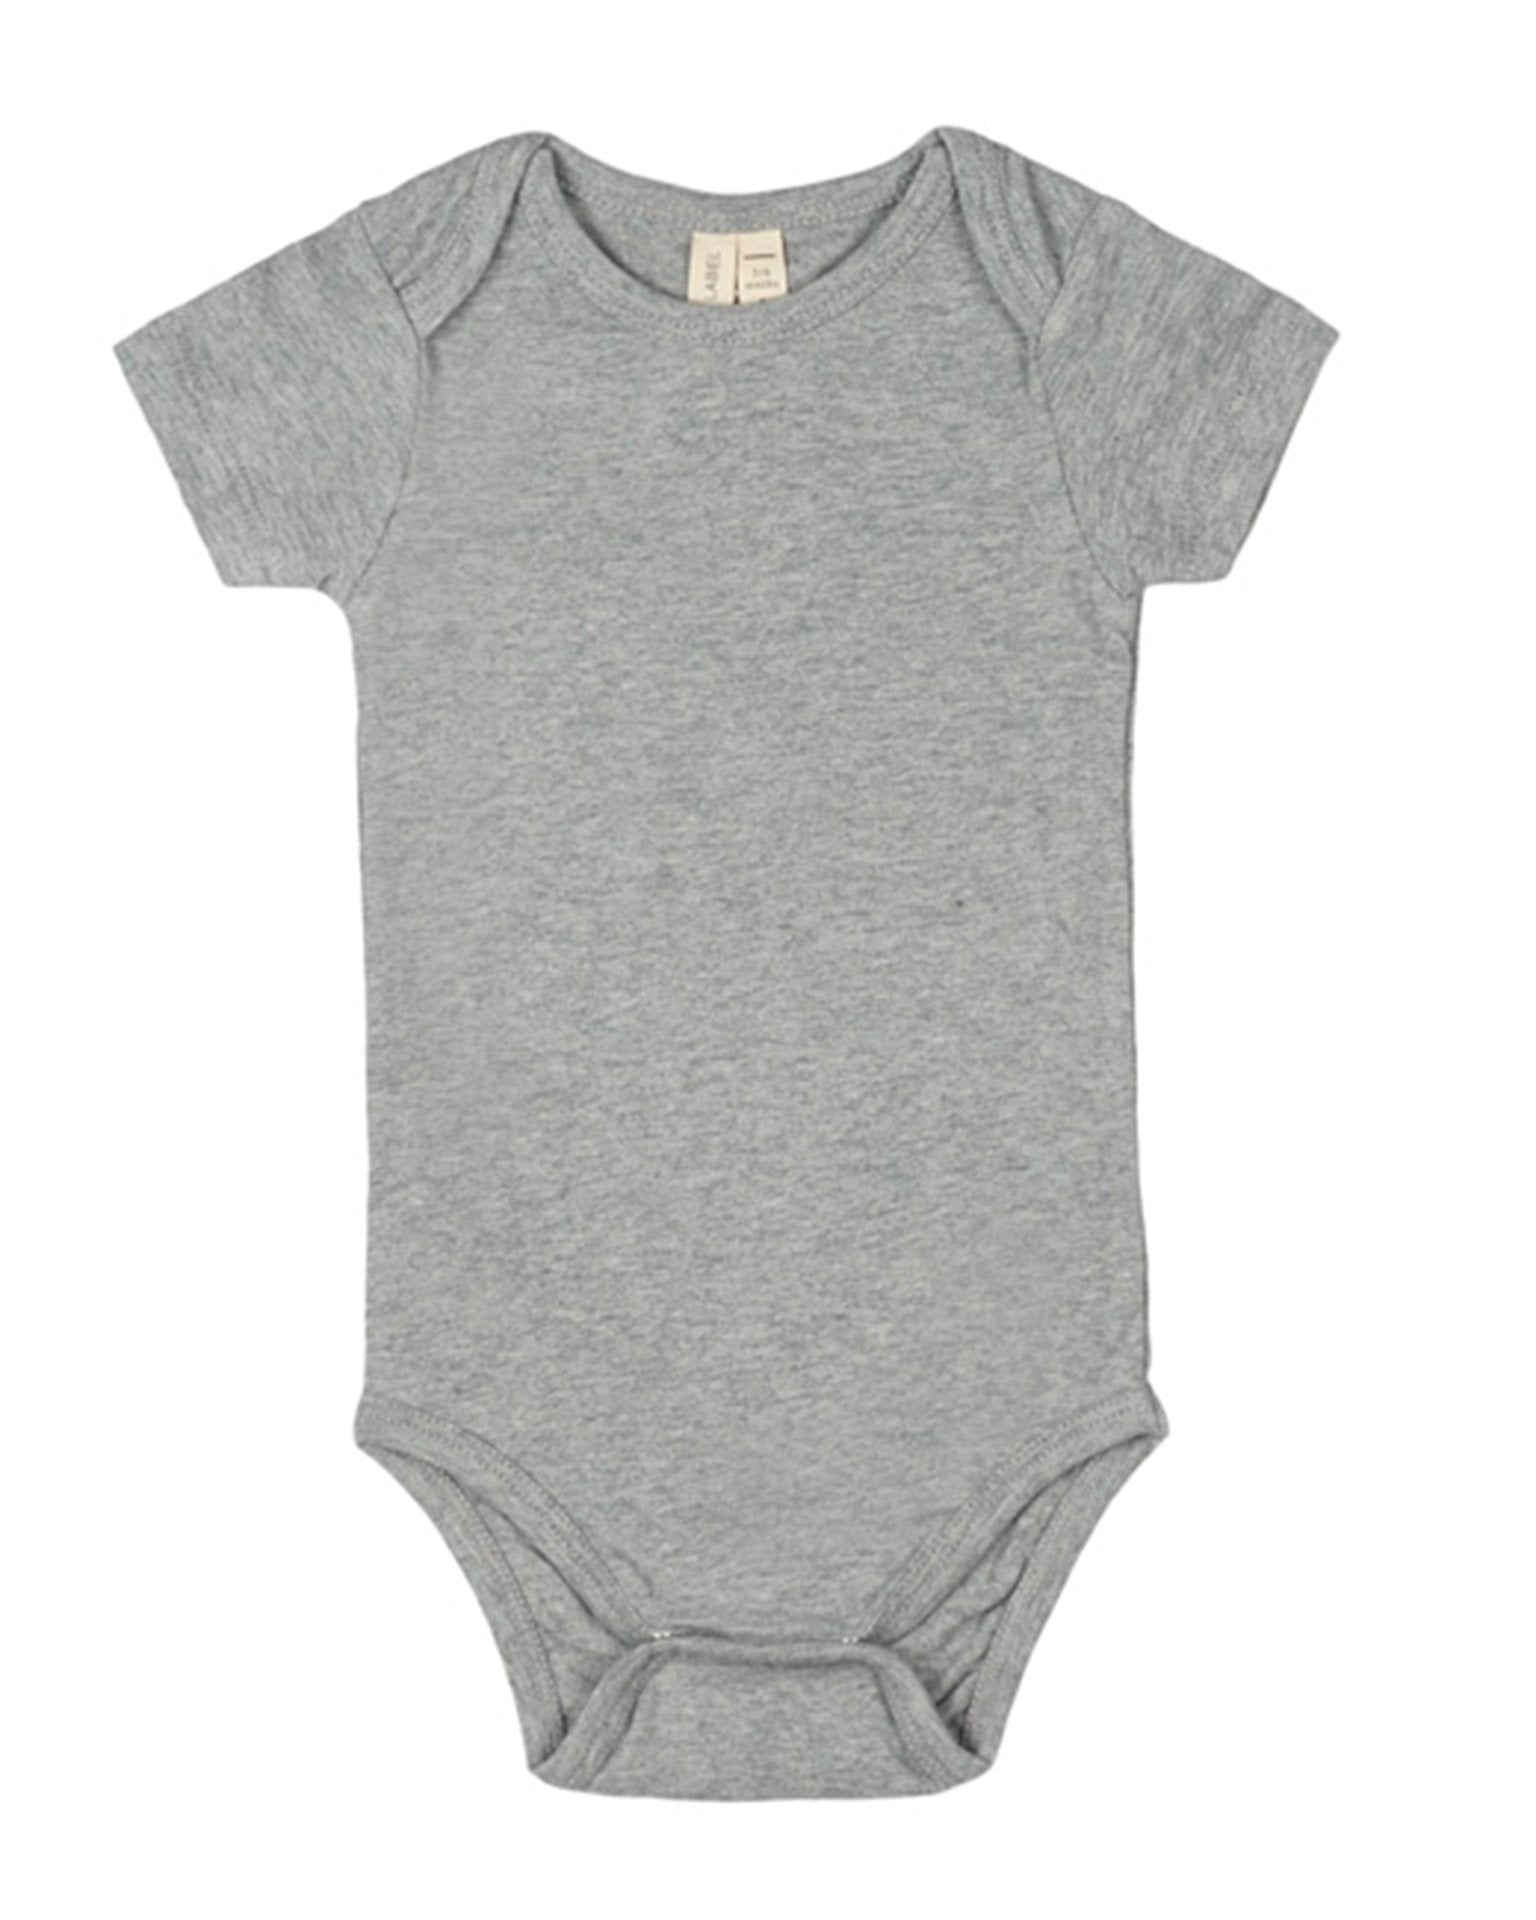 Little gray label layette baby onesie in grey melange